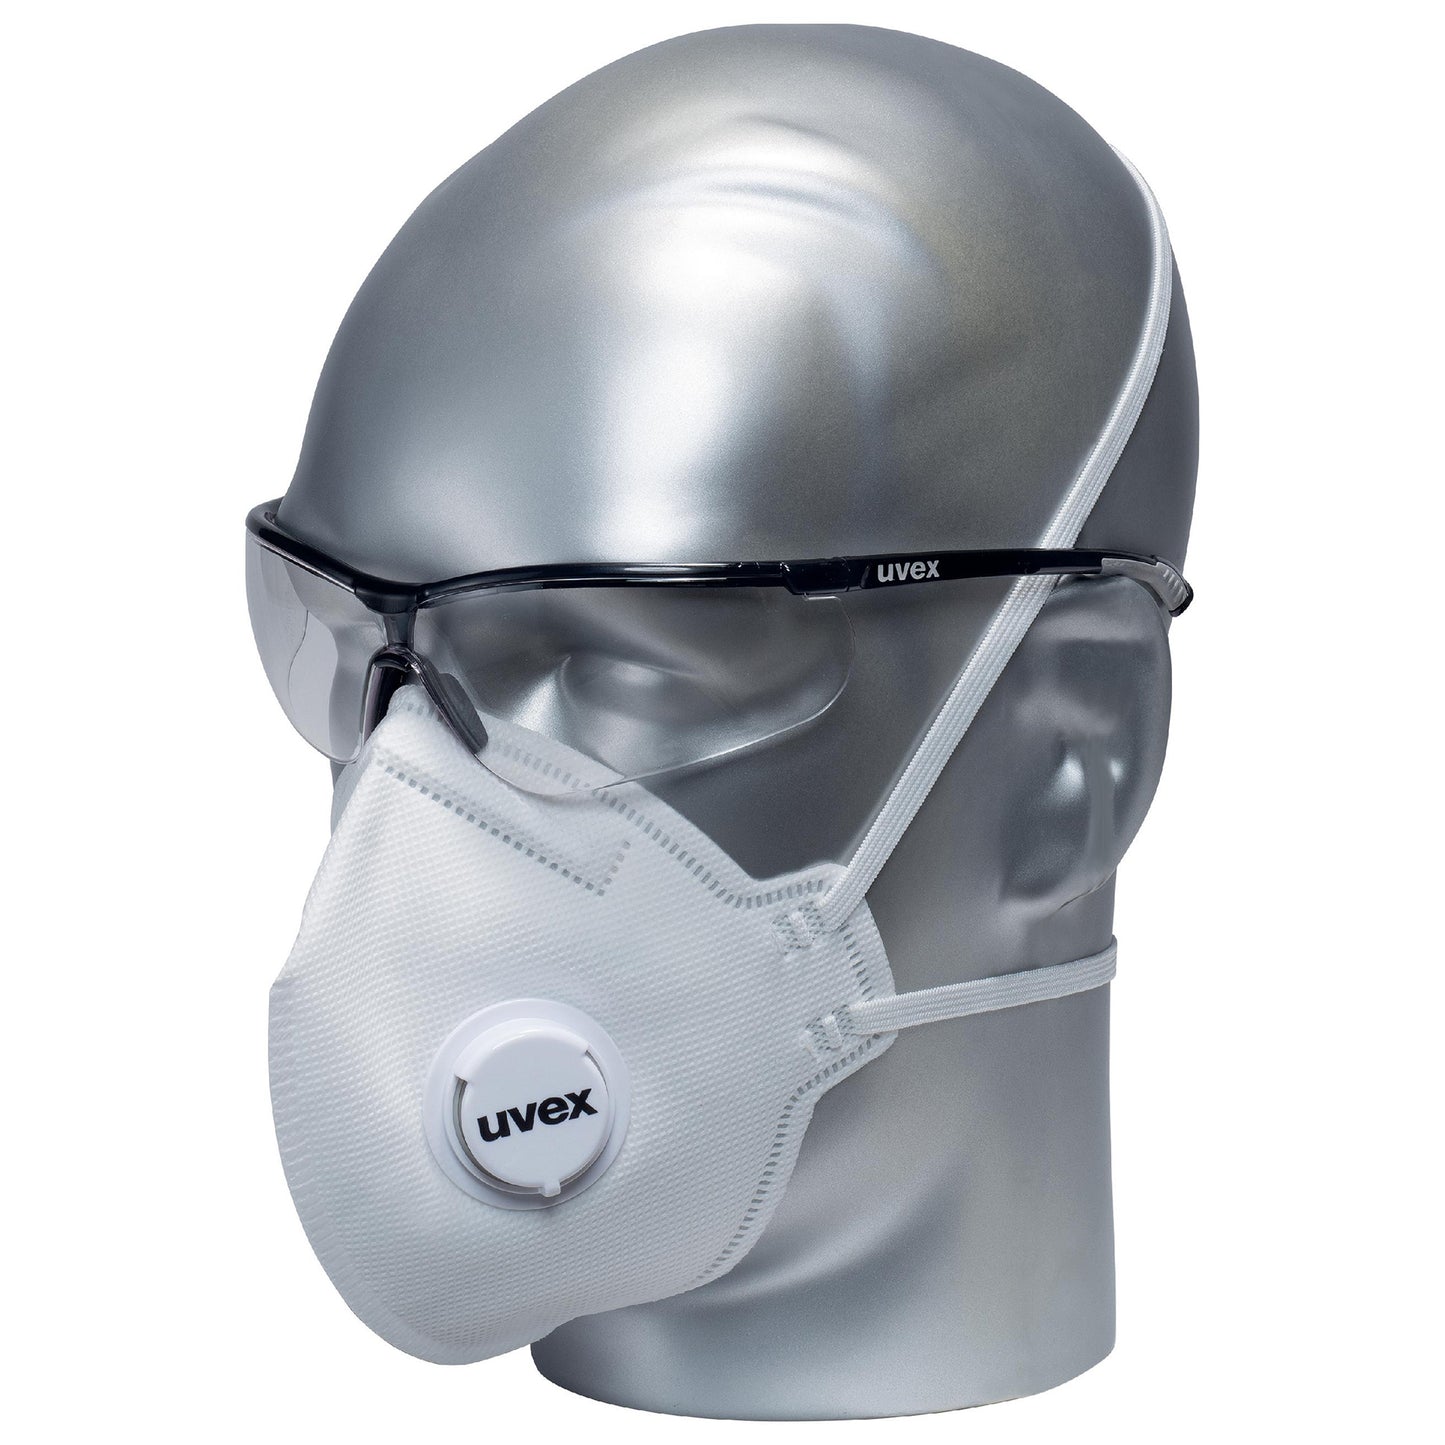 uvex sportstyle Safety Glasses Anti-Fog Lens (Both Sides)